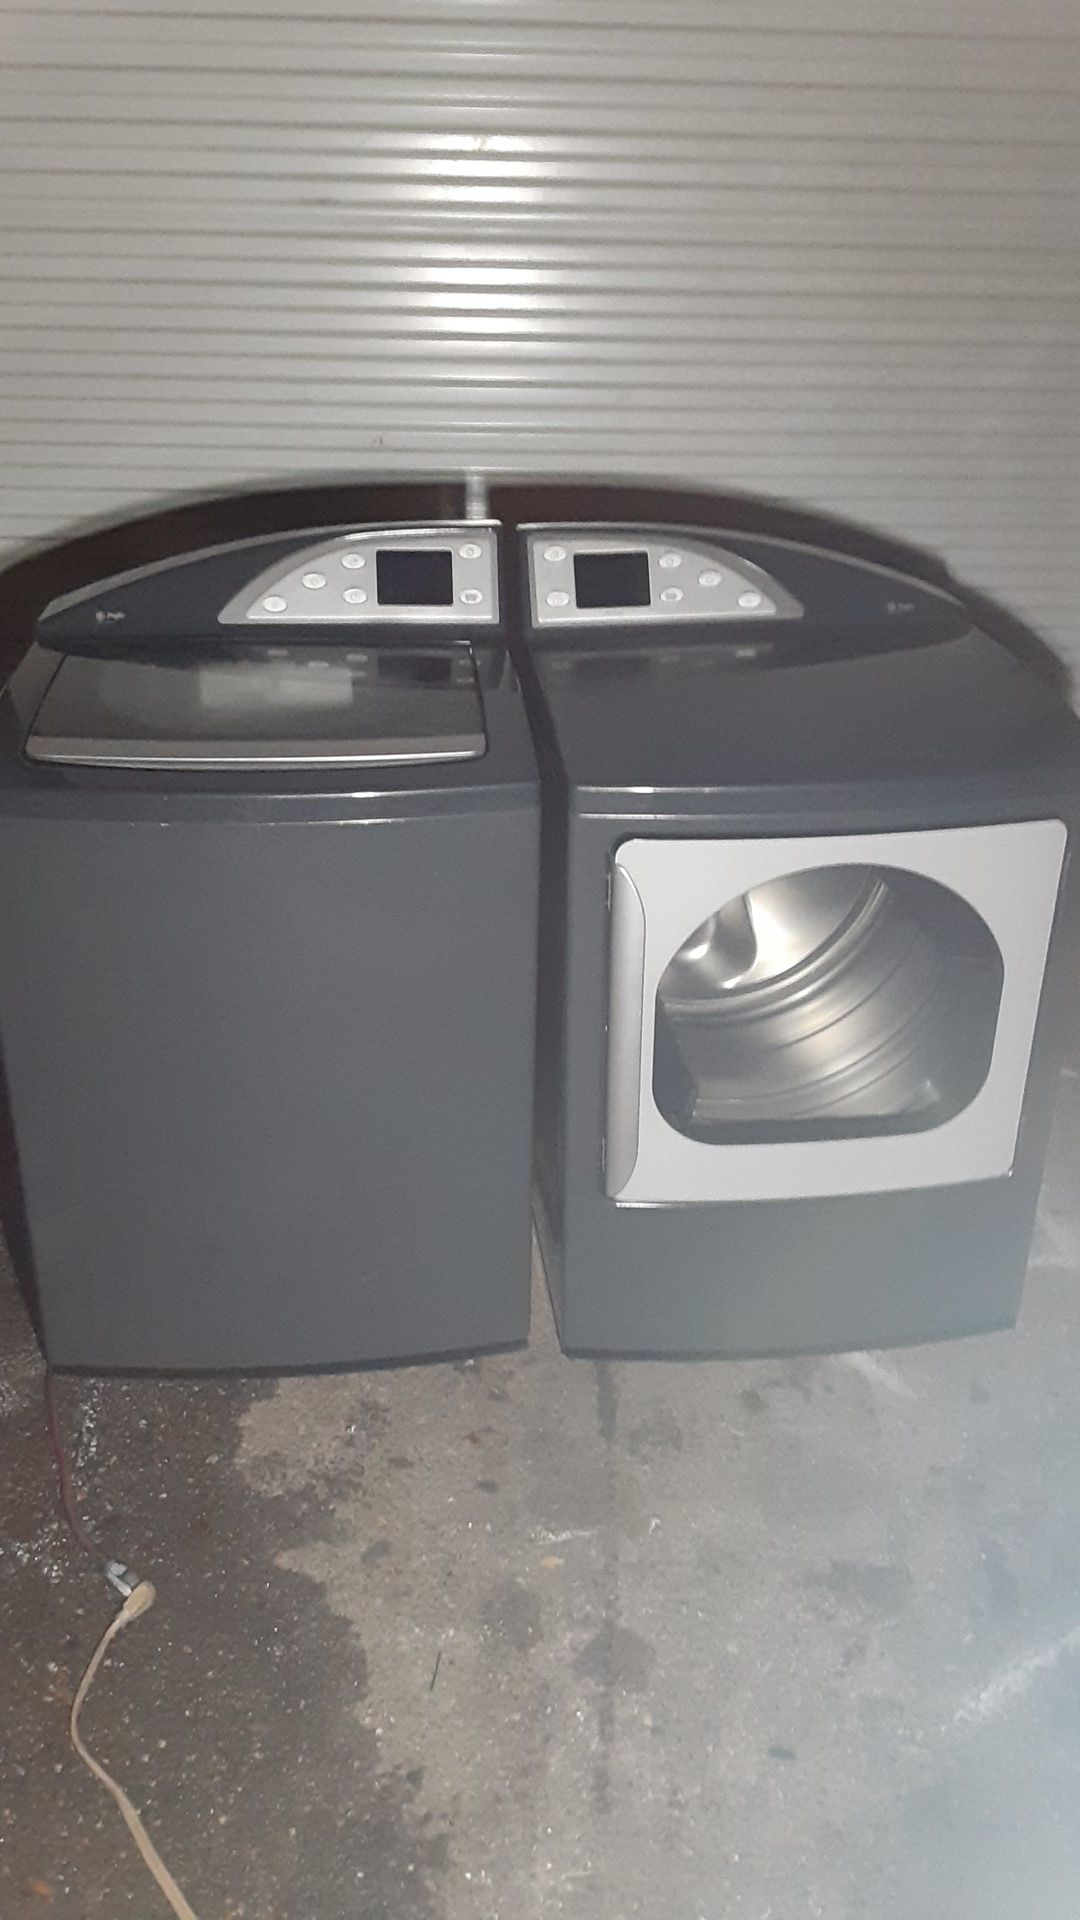 GE Harmony profile washer dryer set like new good working order